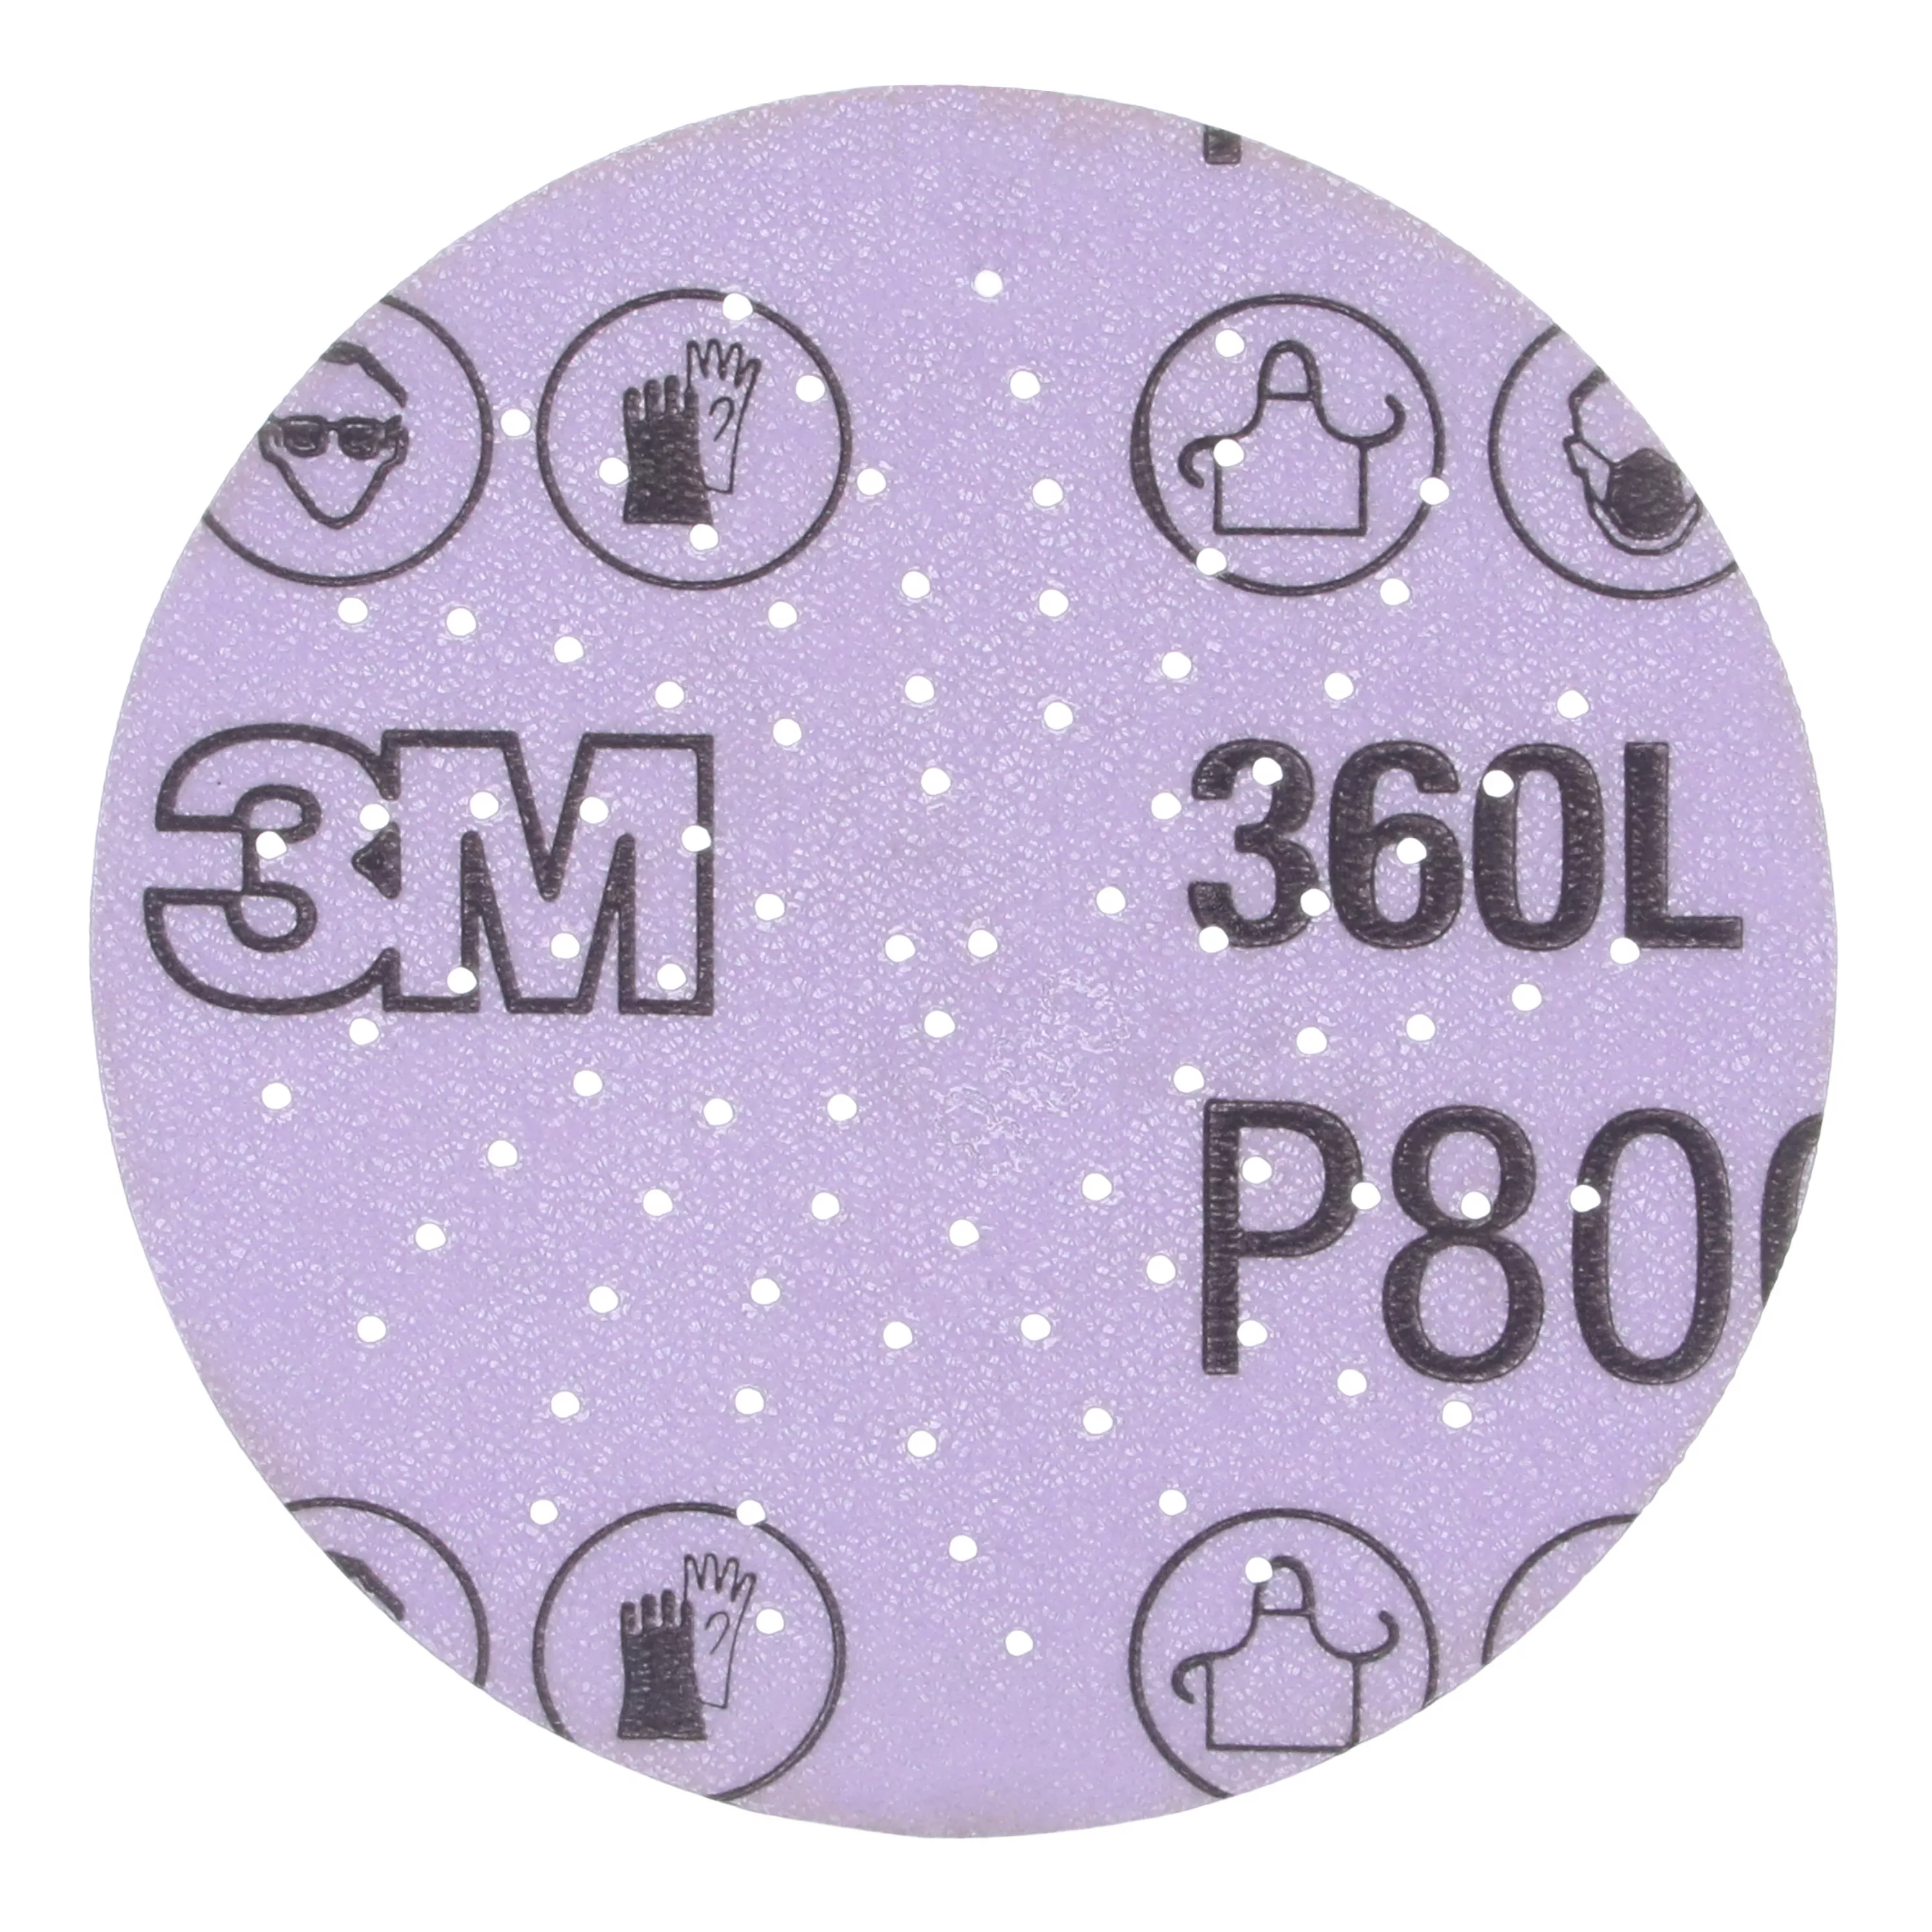 3M Xtract™ Film Disc 360L, P800 3MIL, 3 in, Die 300LG, 100/Carton, 500
ea/Case